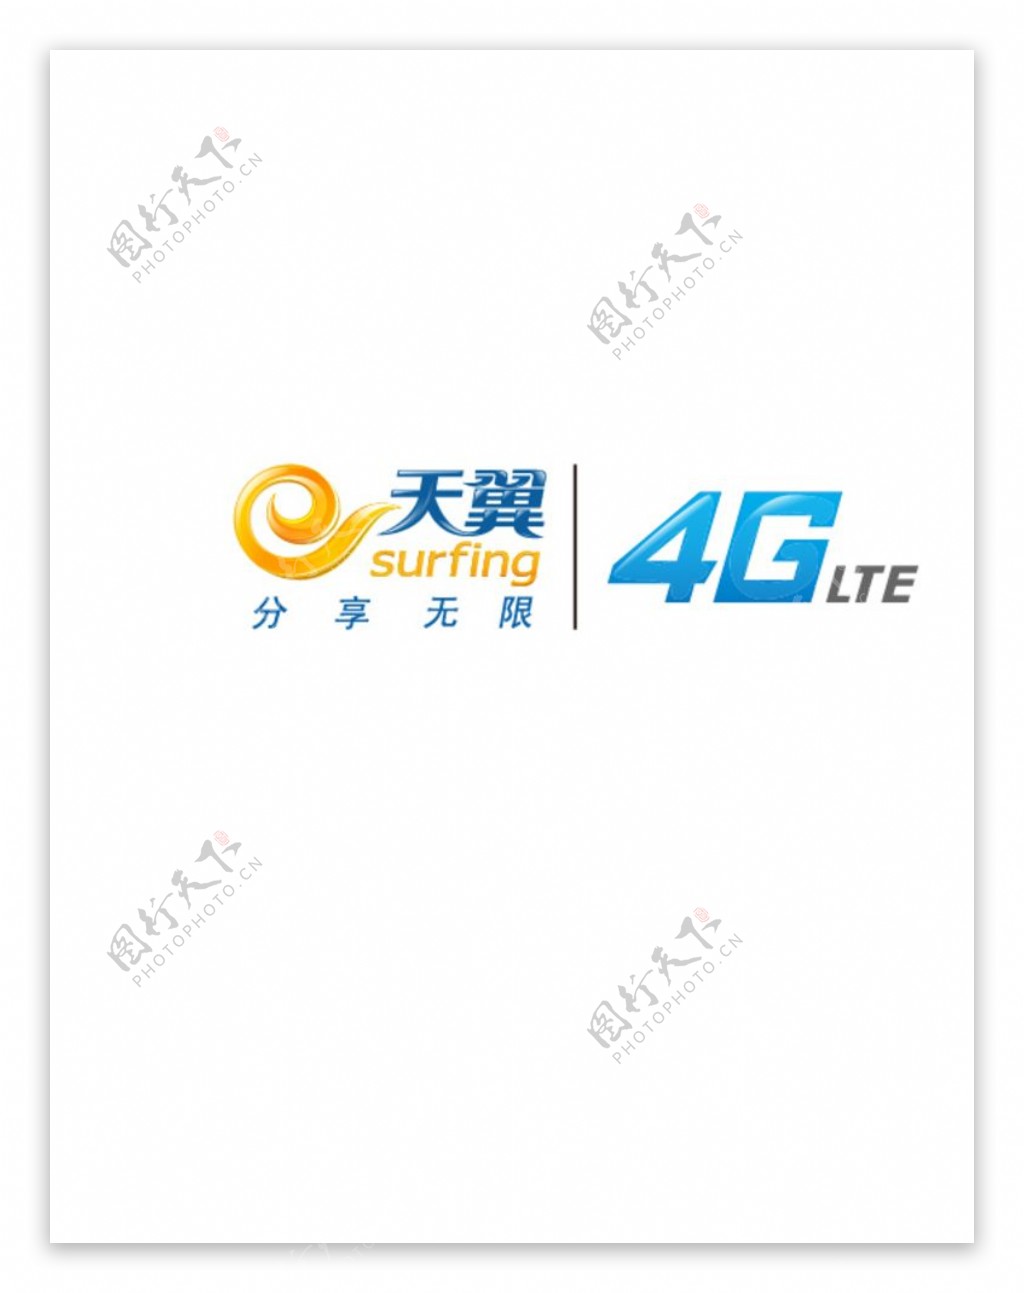 4G新logo设计图片素材-编号24987579-图行天下